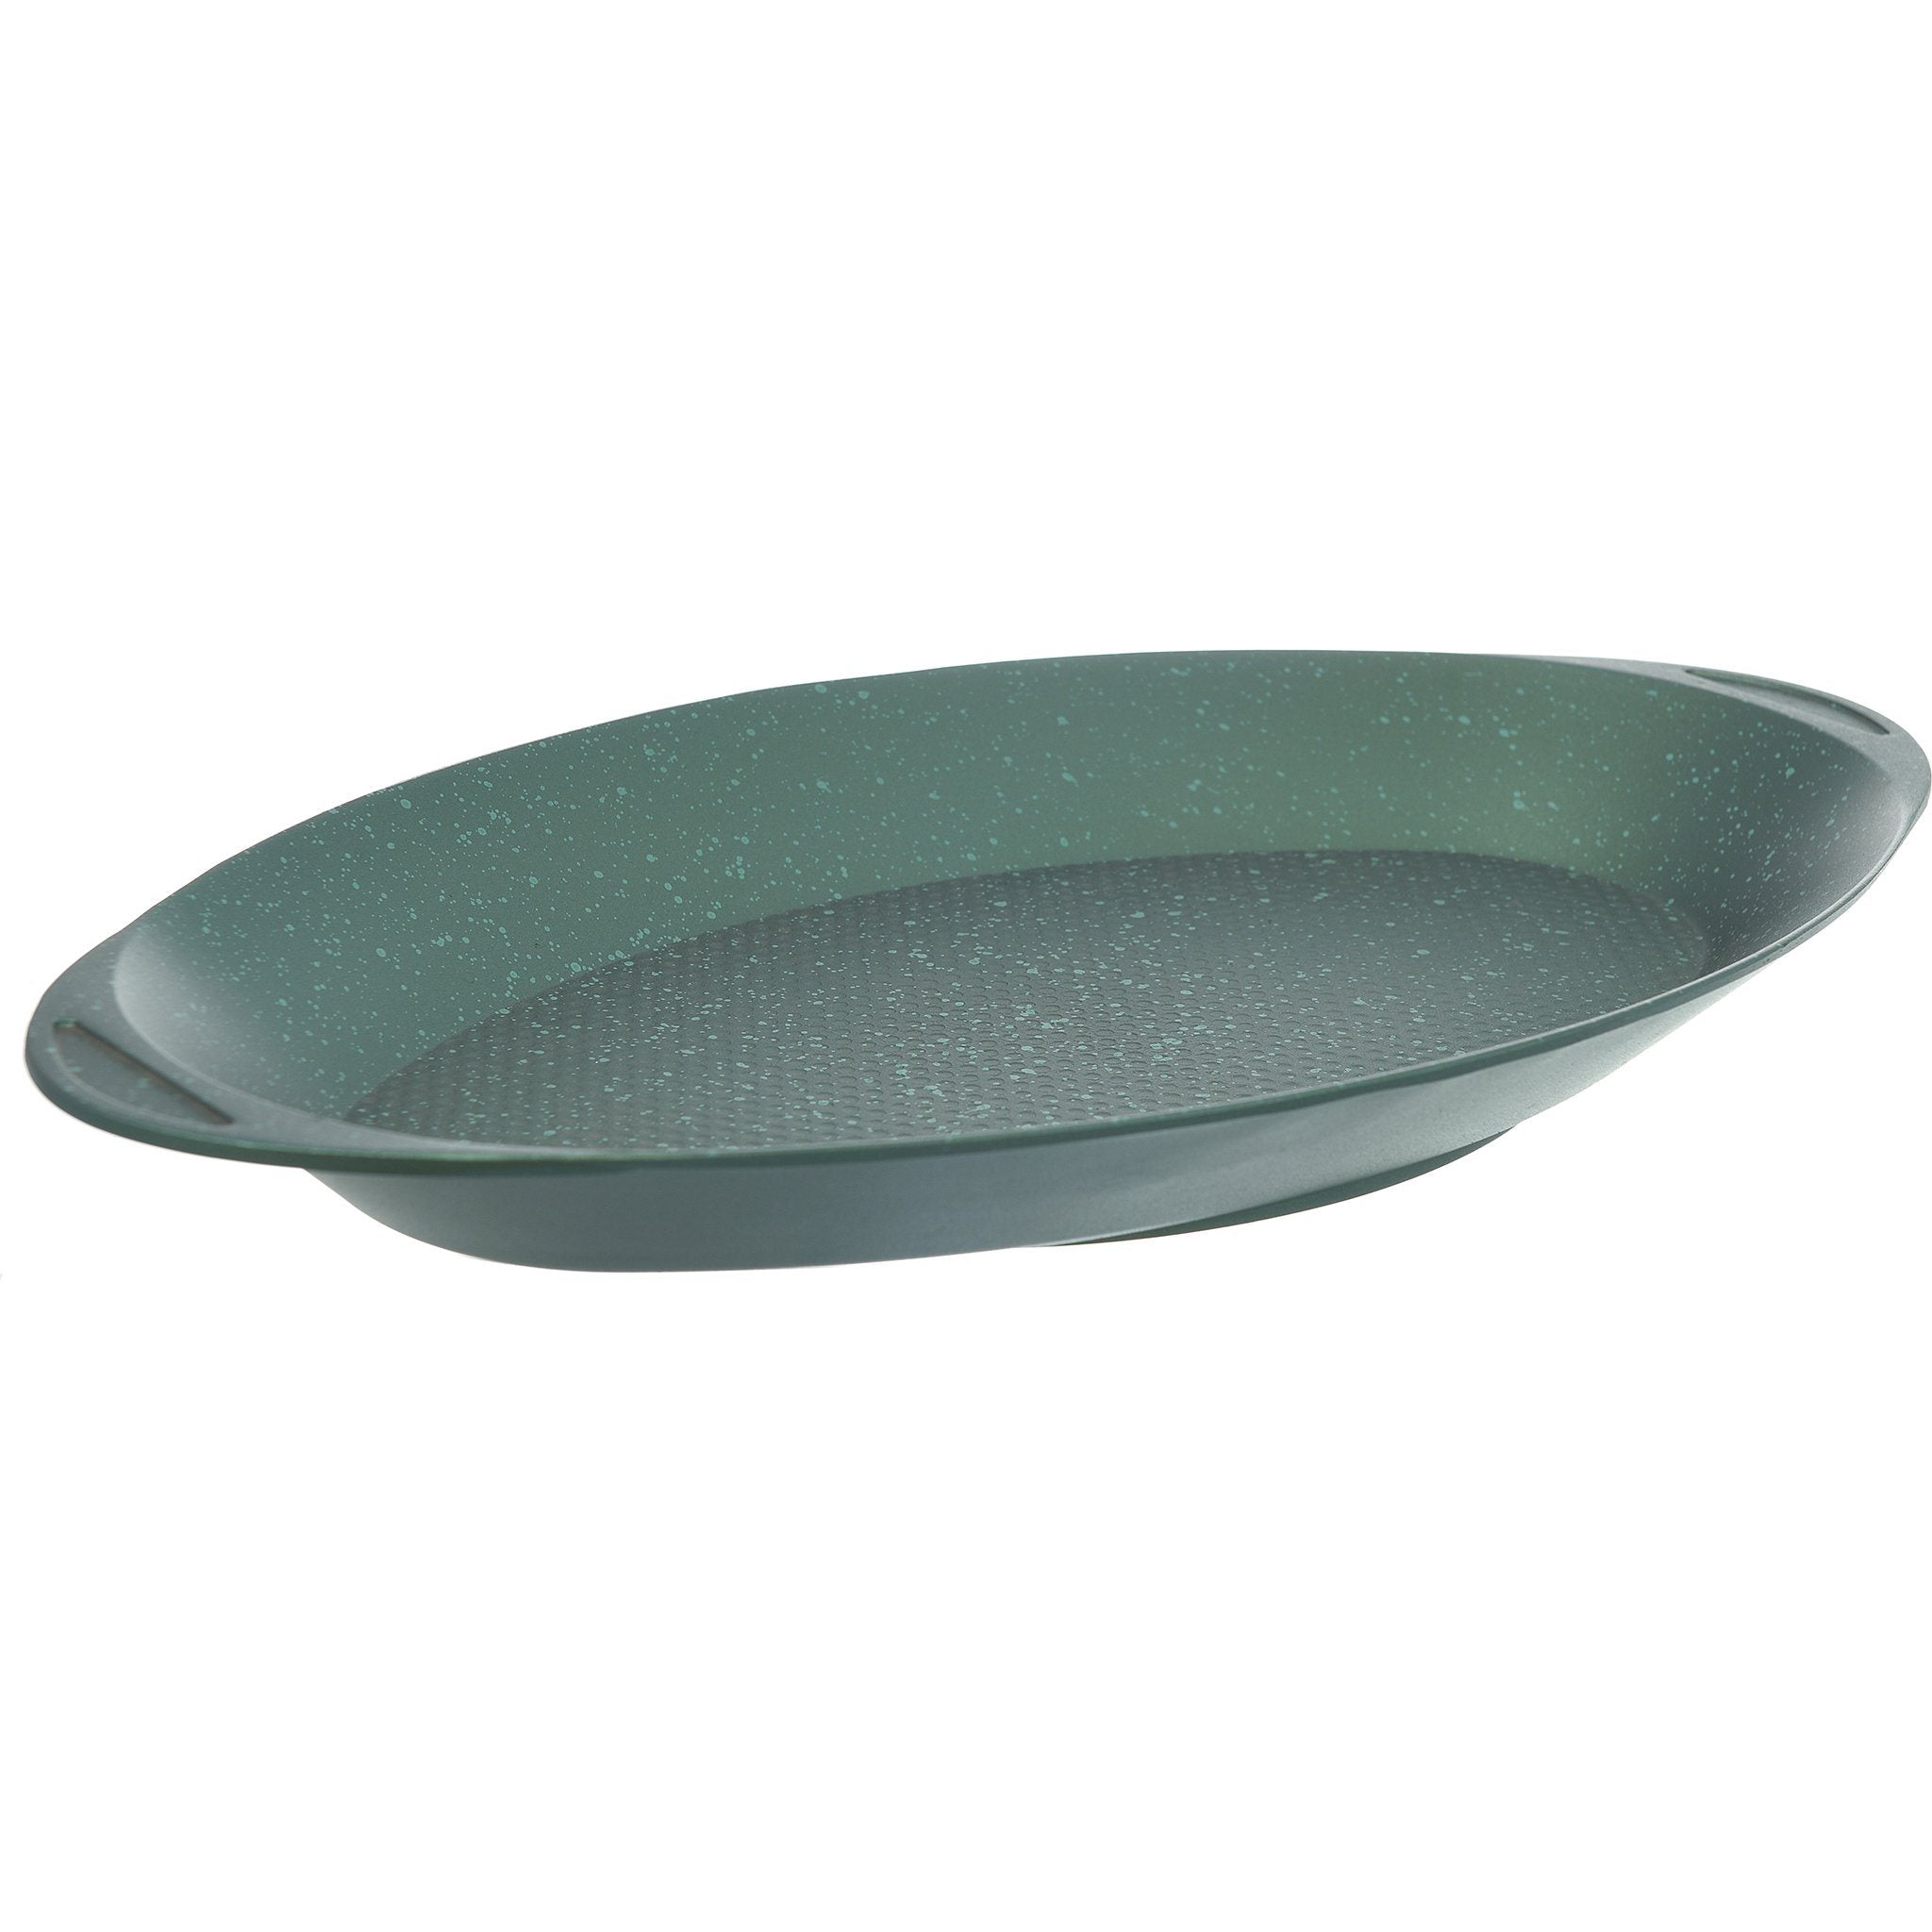 Risoli - Dr. Green Oval Fishpan - Green - Die Cast Aluminum - 42cm - 44000407